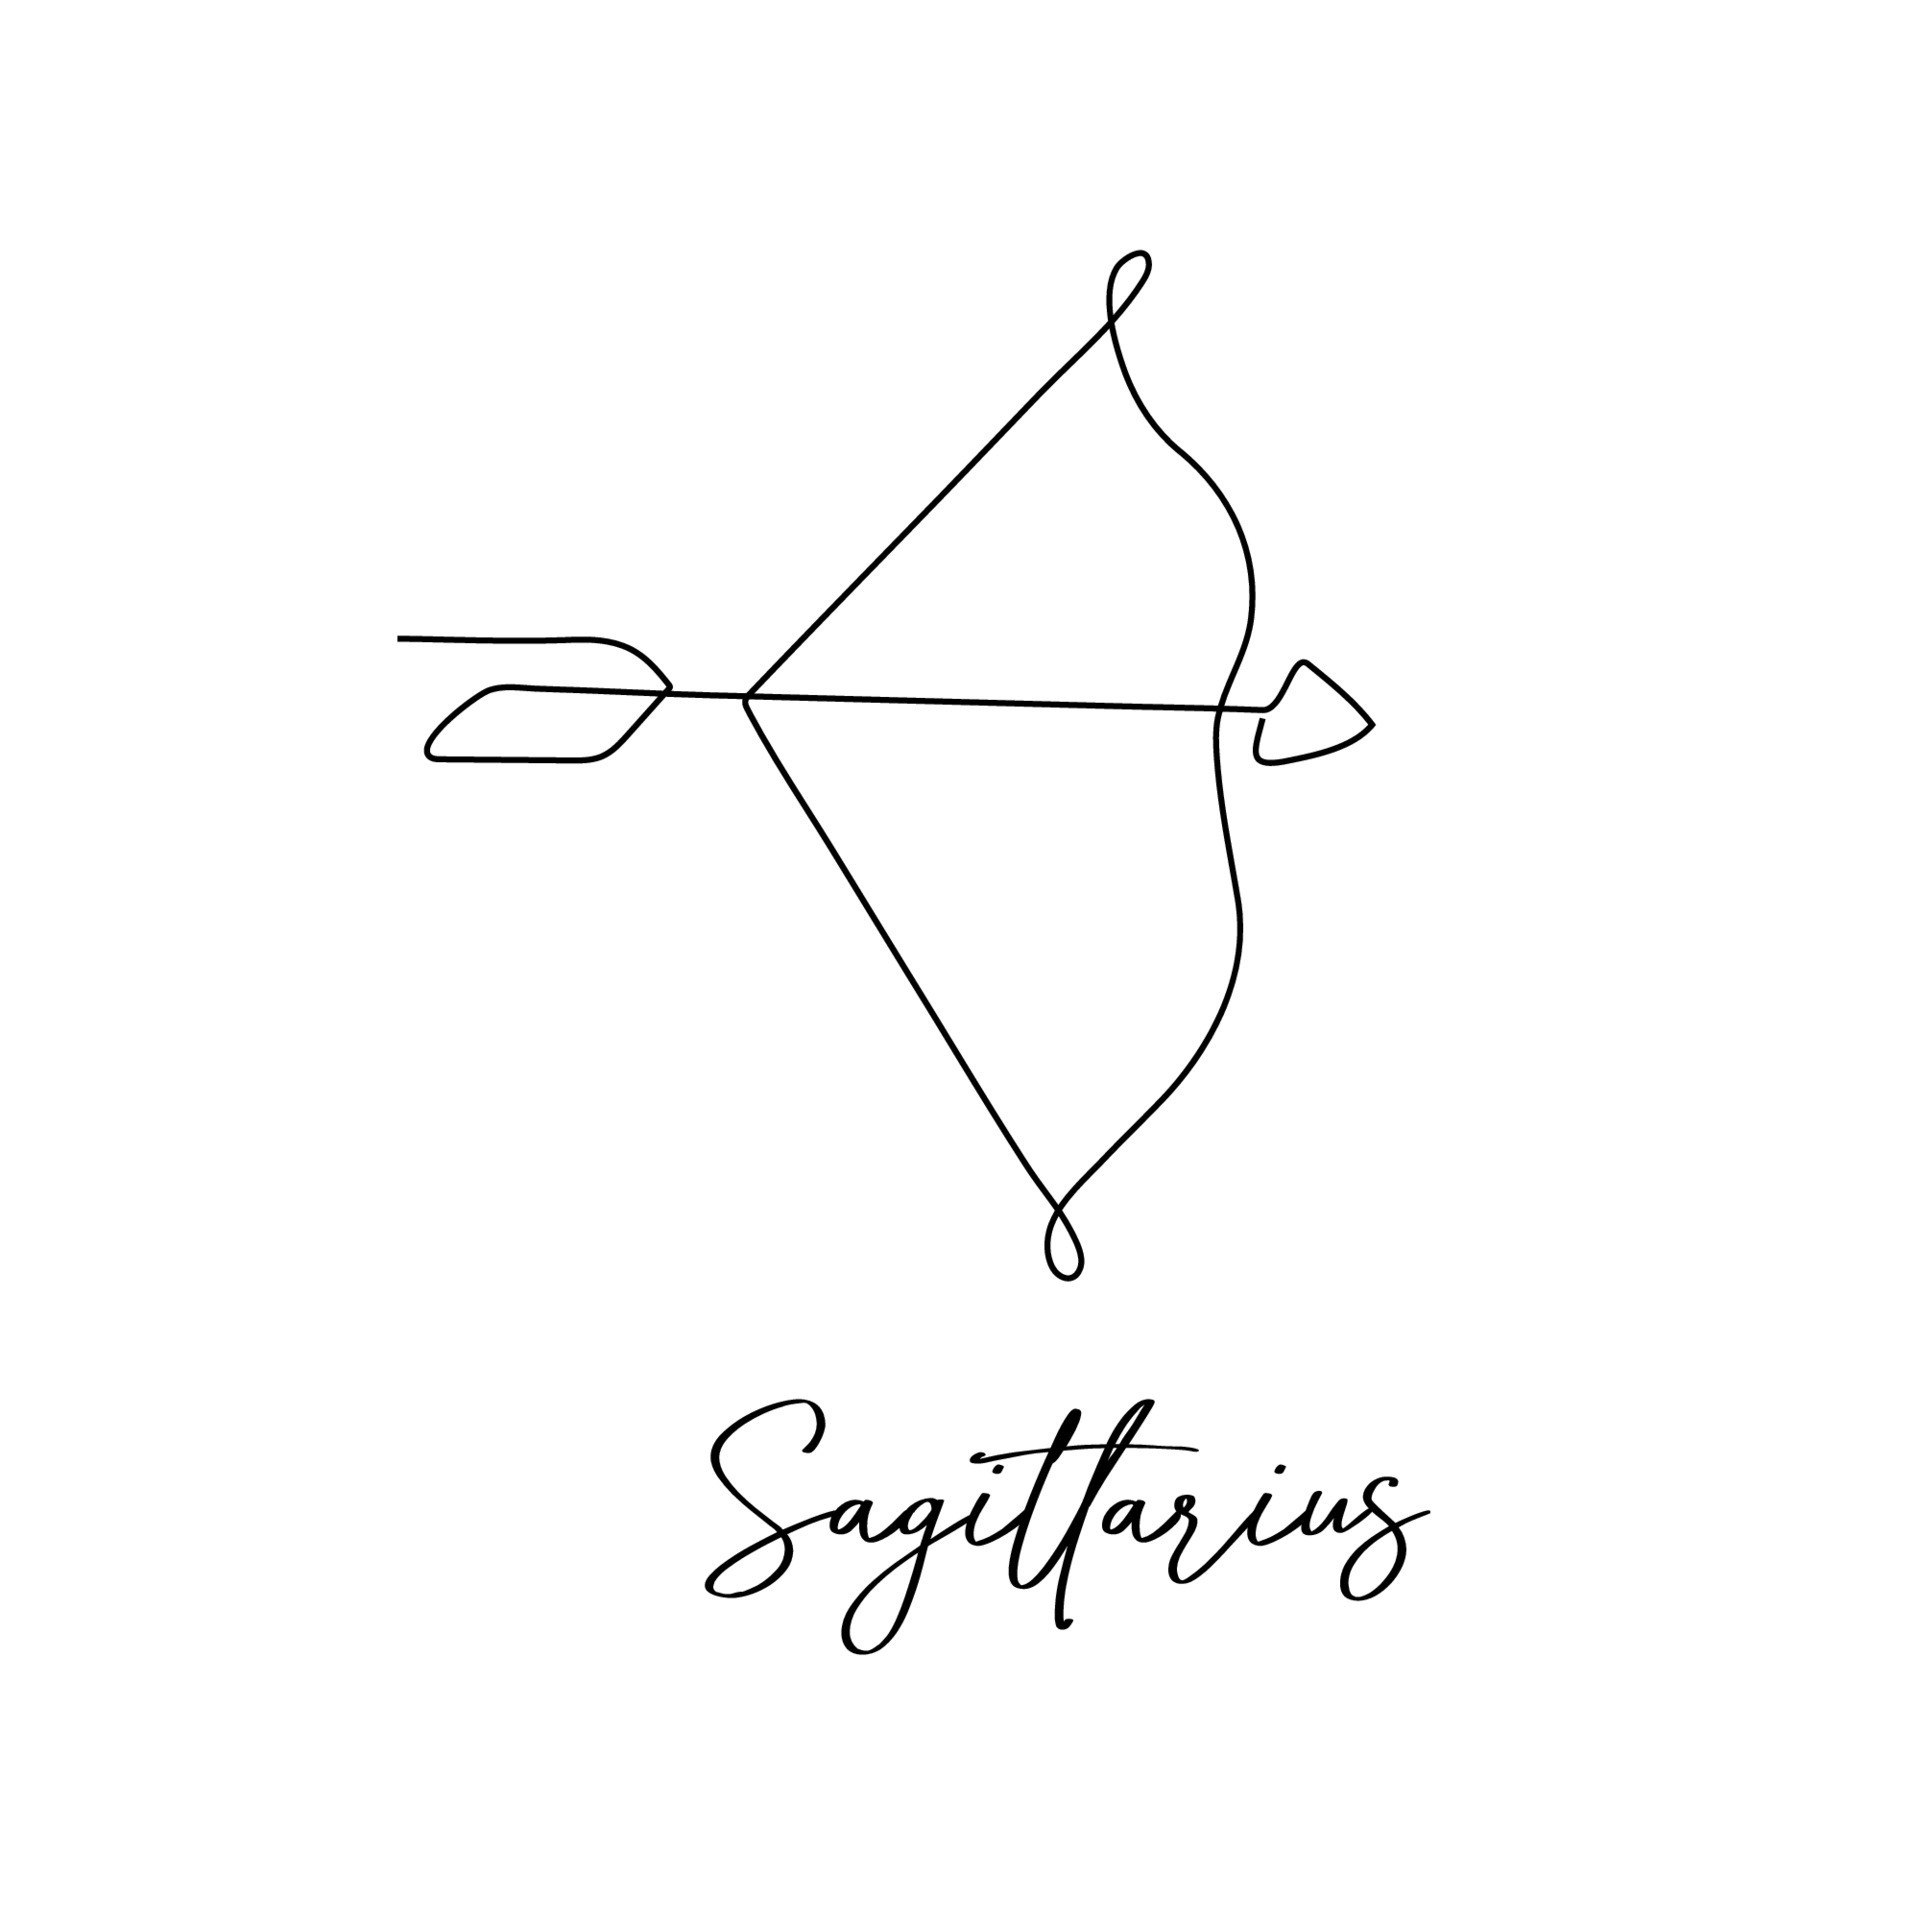 Astrology zodiac sign Sagittarius horoscope symbol in line art style ...